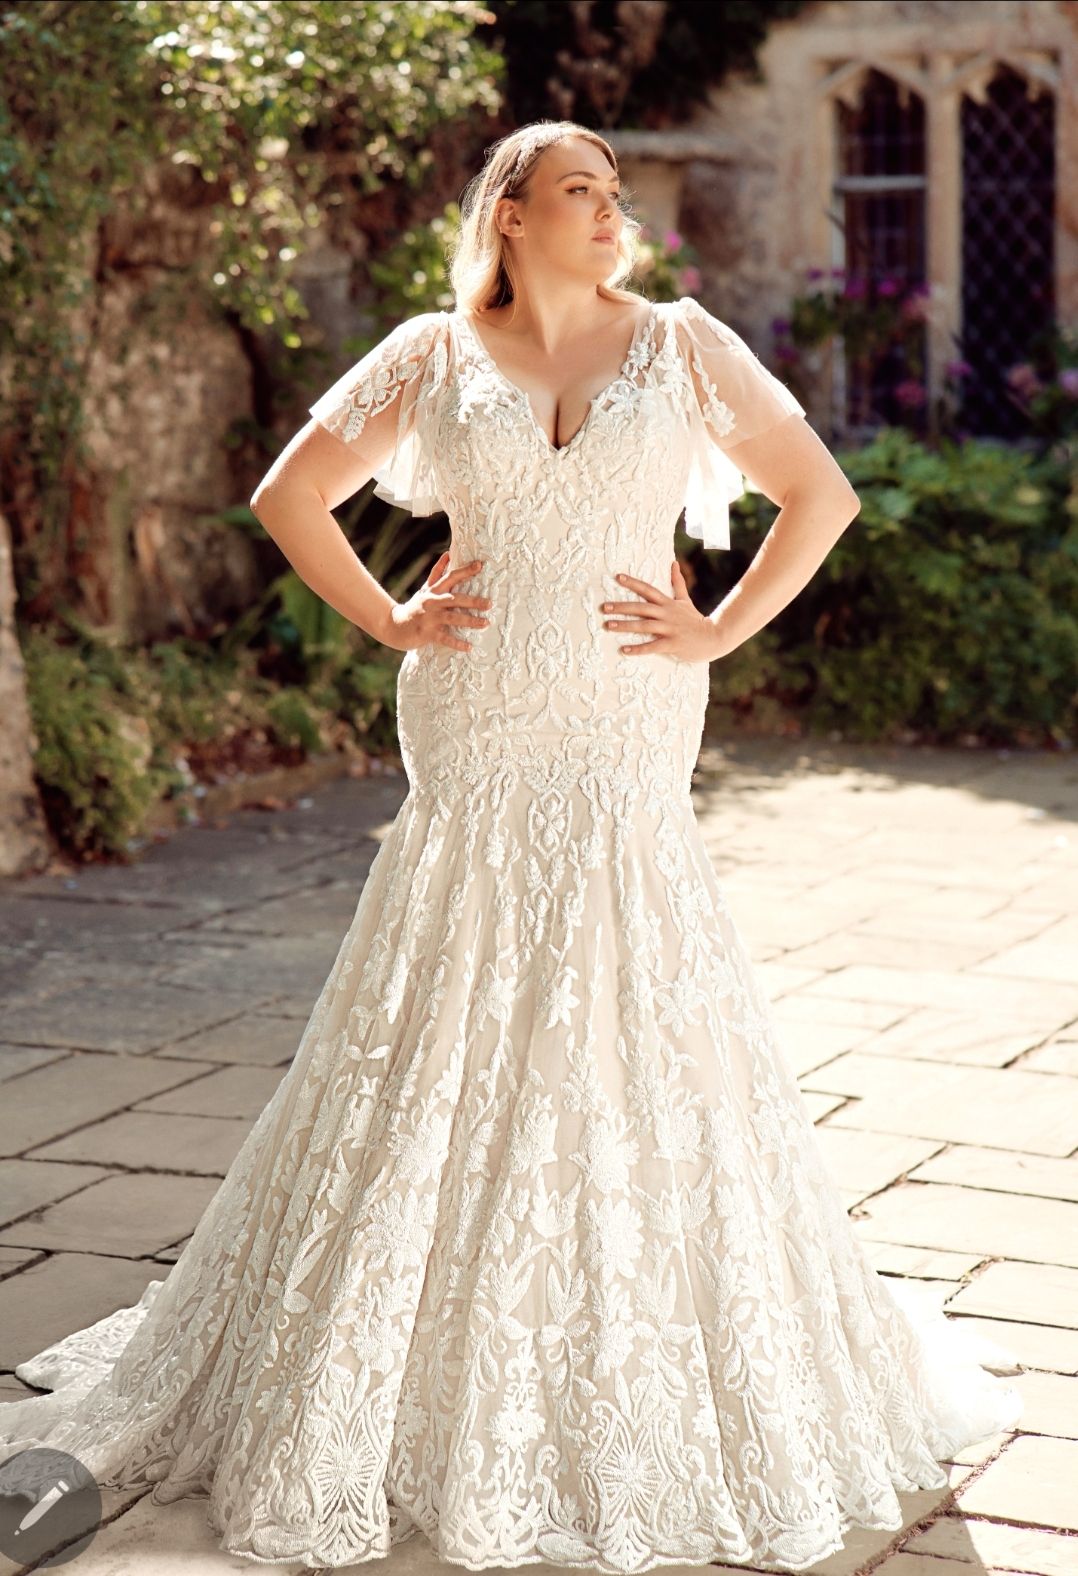 Best Dress 2 Impress Bridal-Image-32